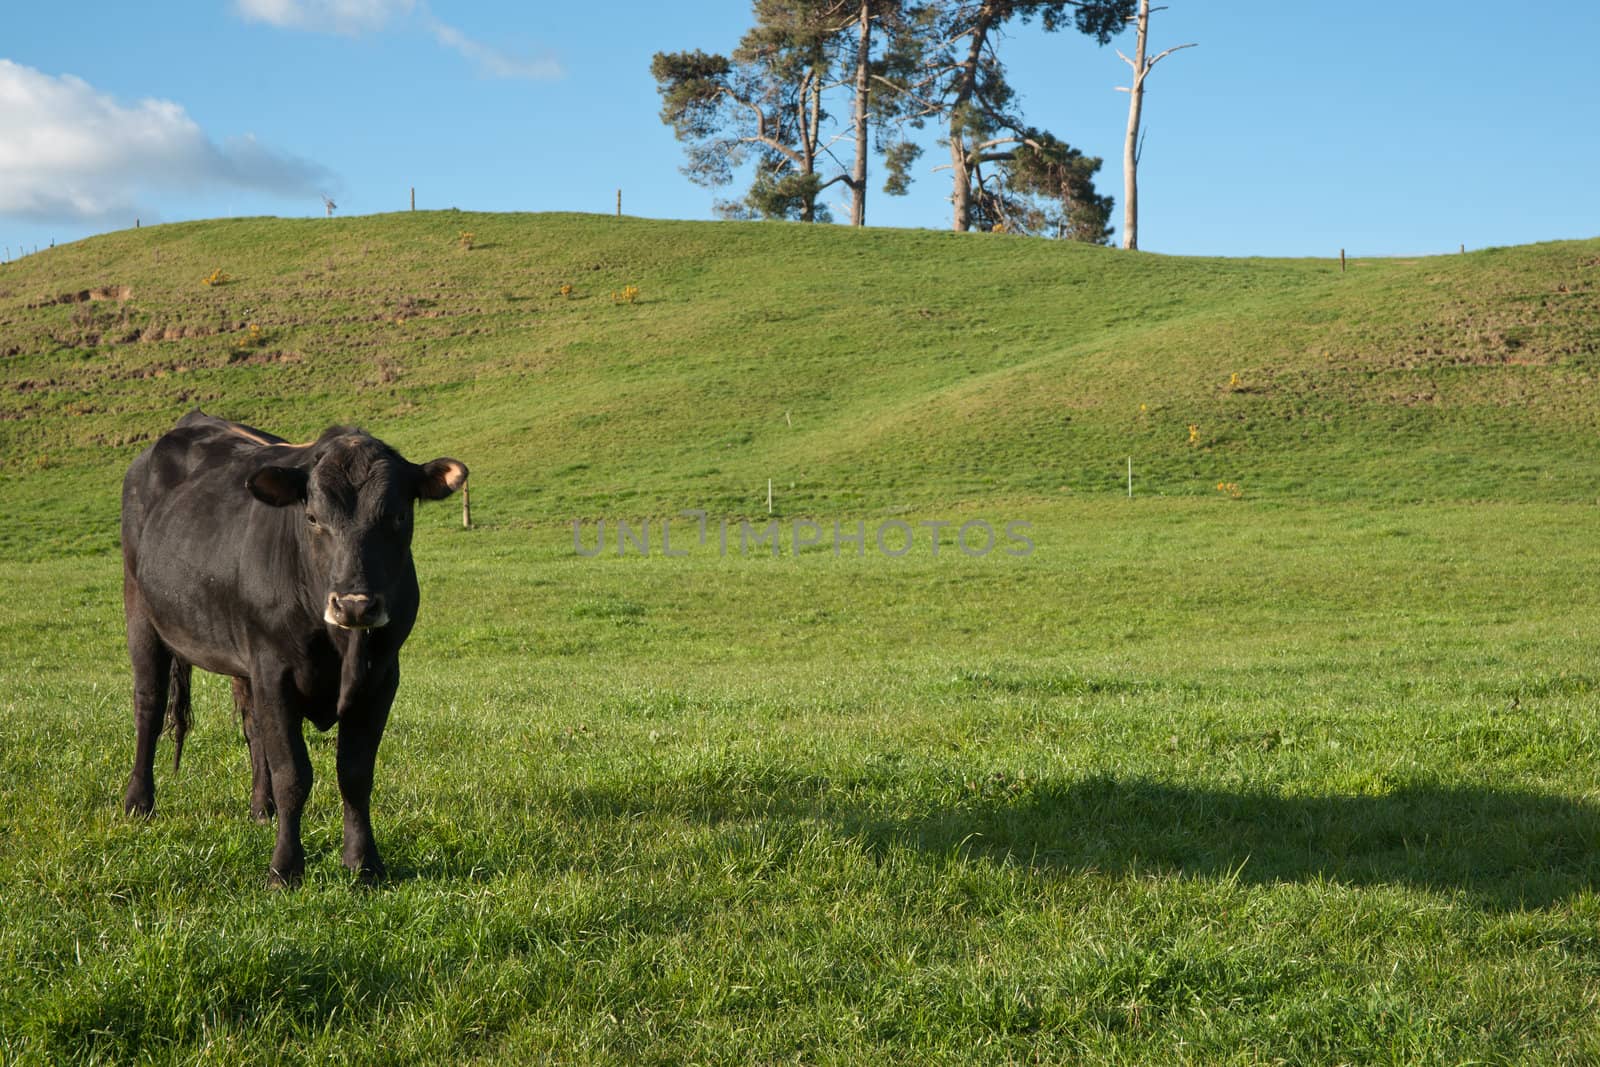 Black cow looks towards camera.